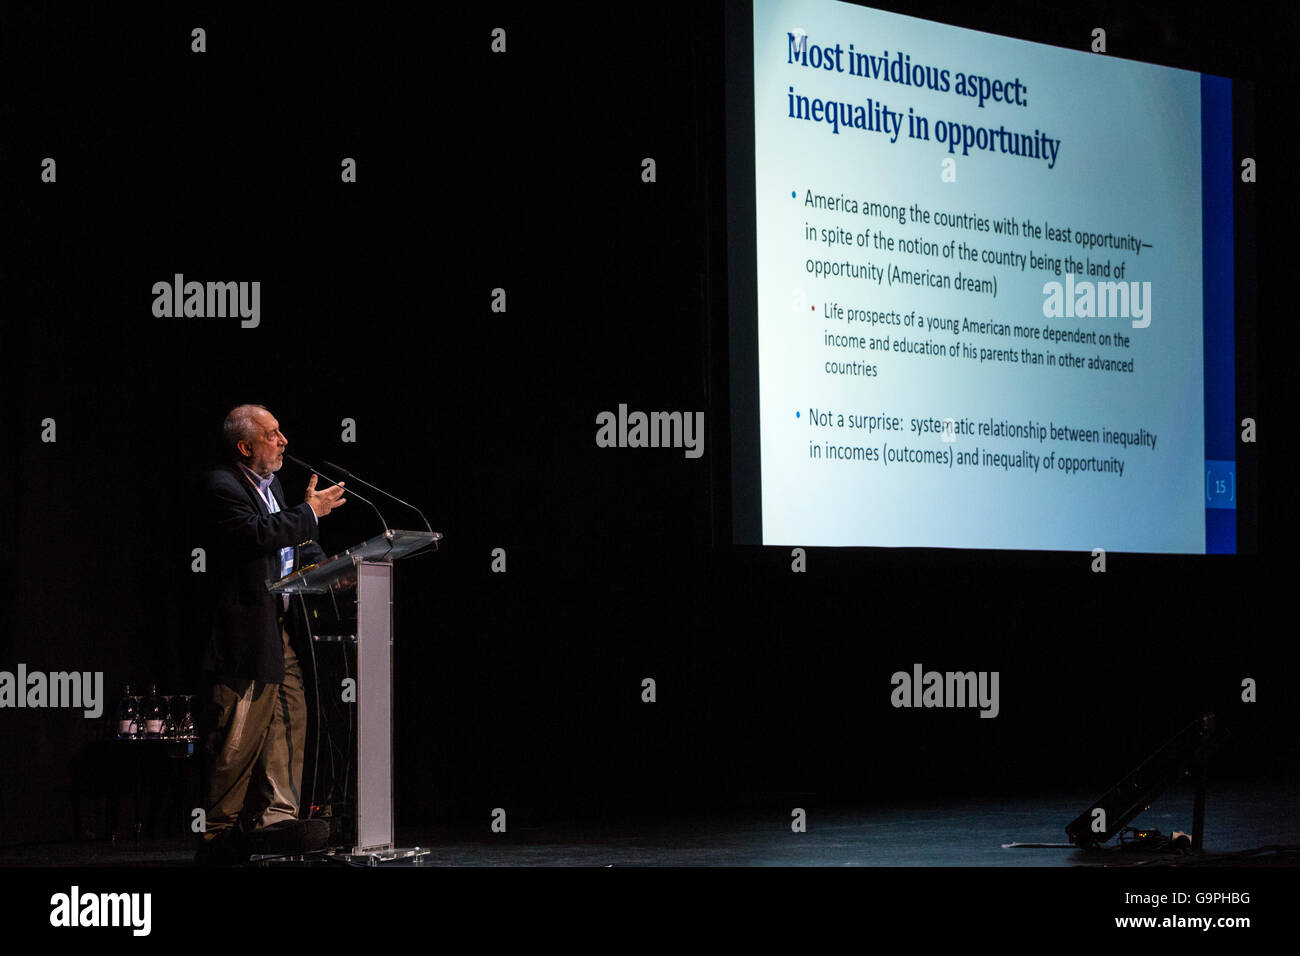 Joseph Eugene Stiglitz, ForMemRS, FBA,  economist speaking at Starmus festival in Tenerife. He is a professor at Columbia Univer Stock Photo